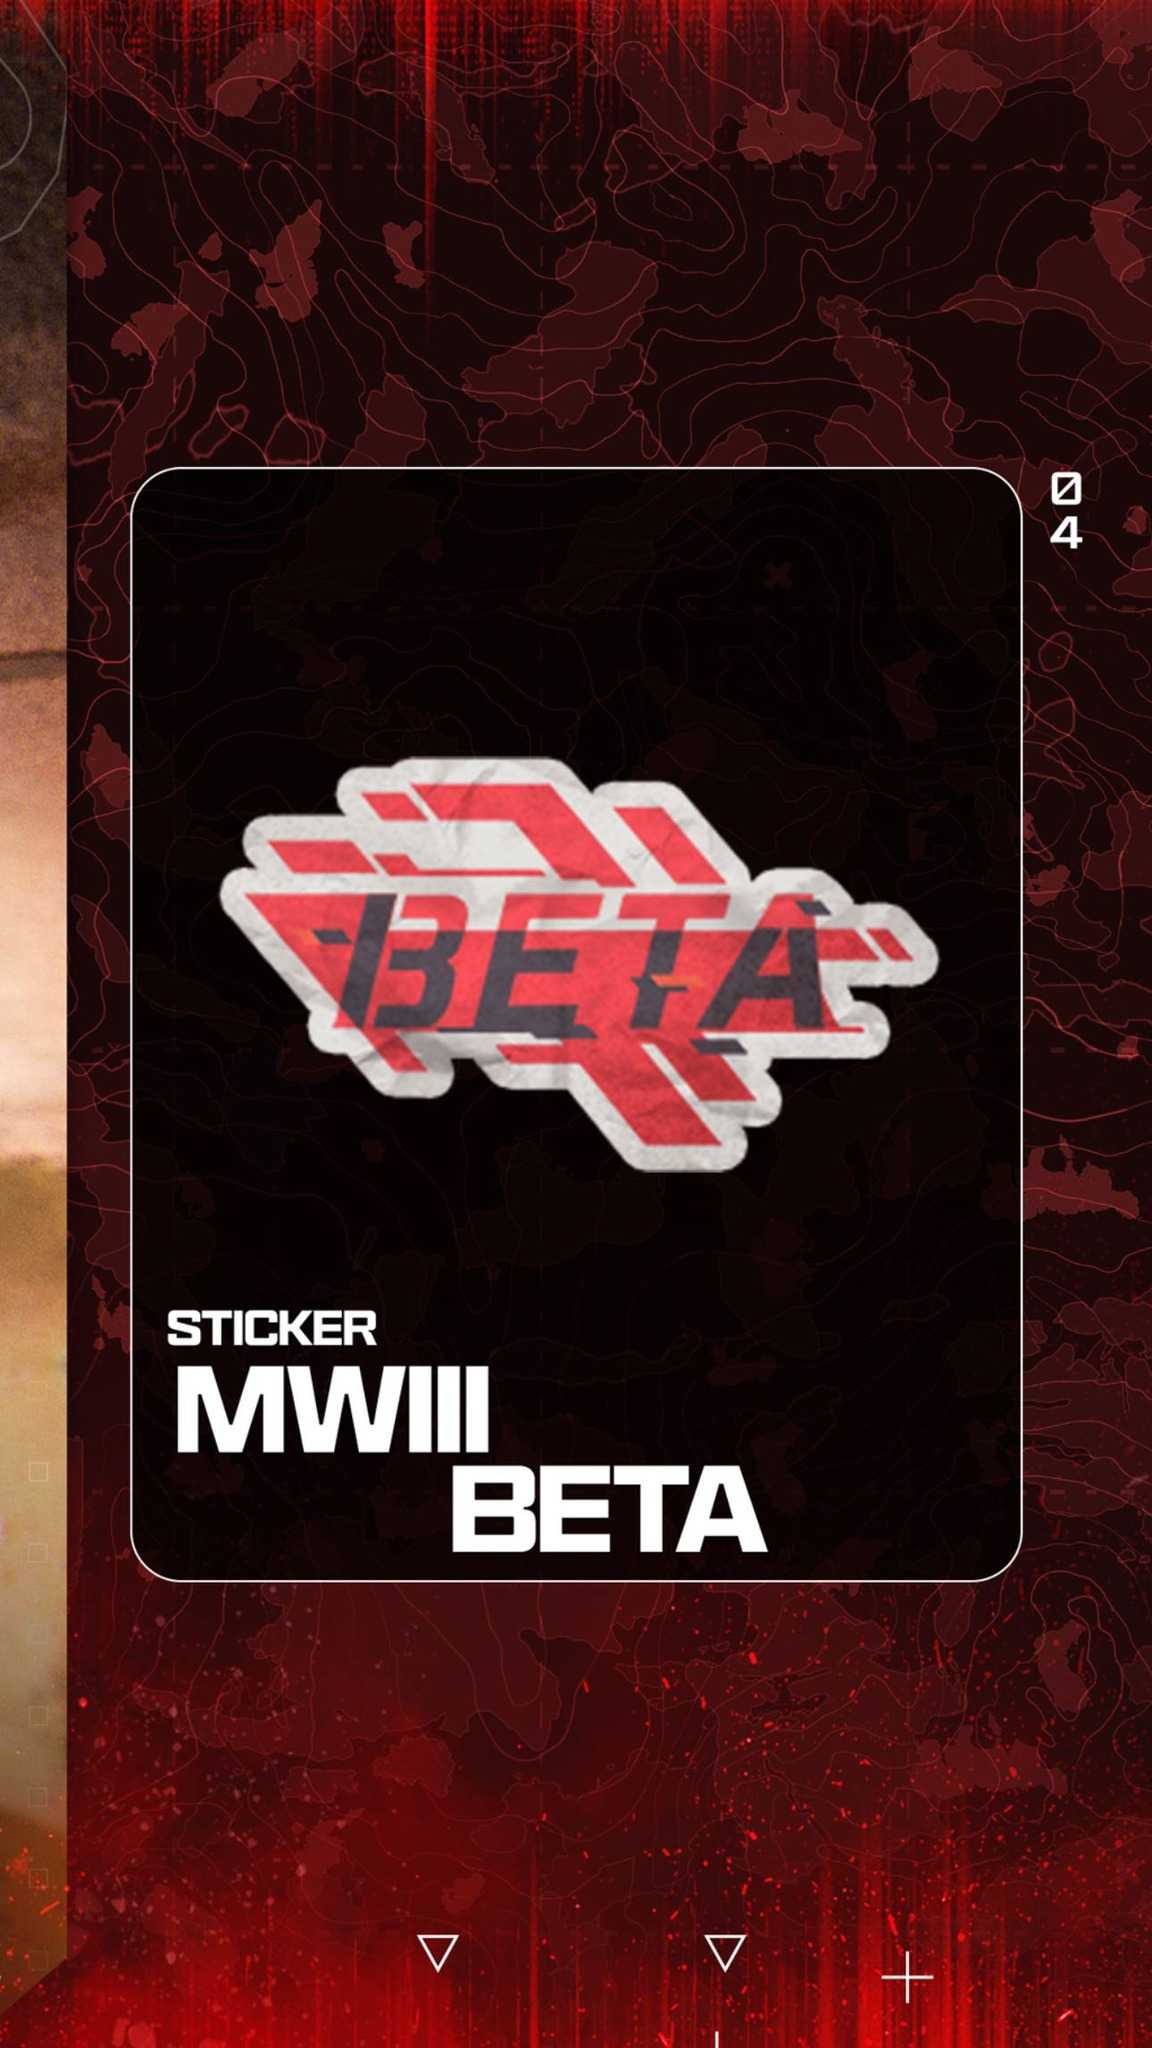 Beta sticker from MW3